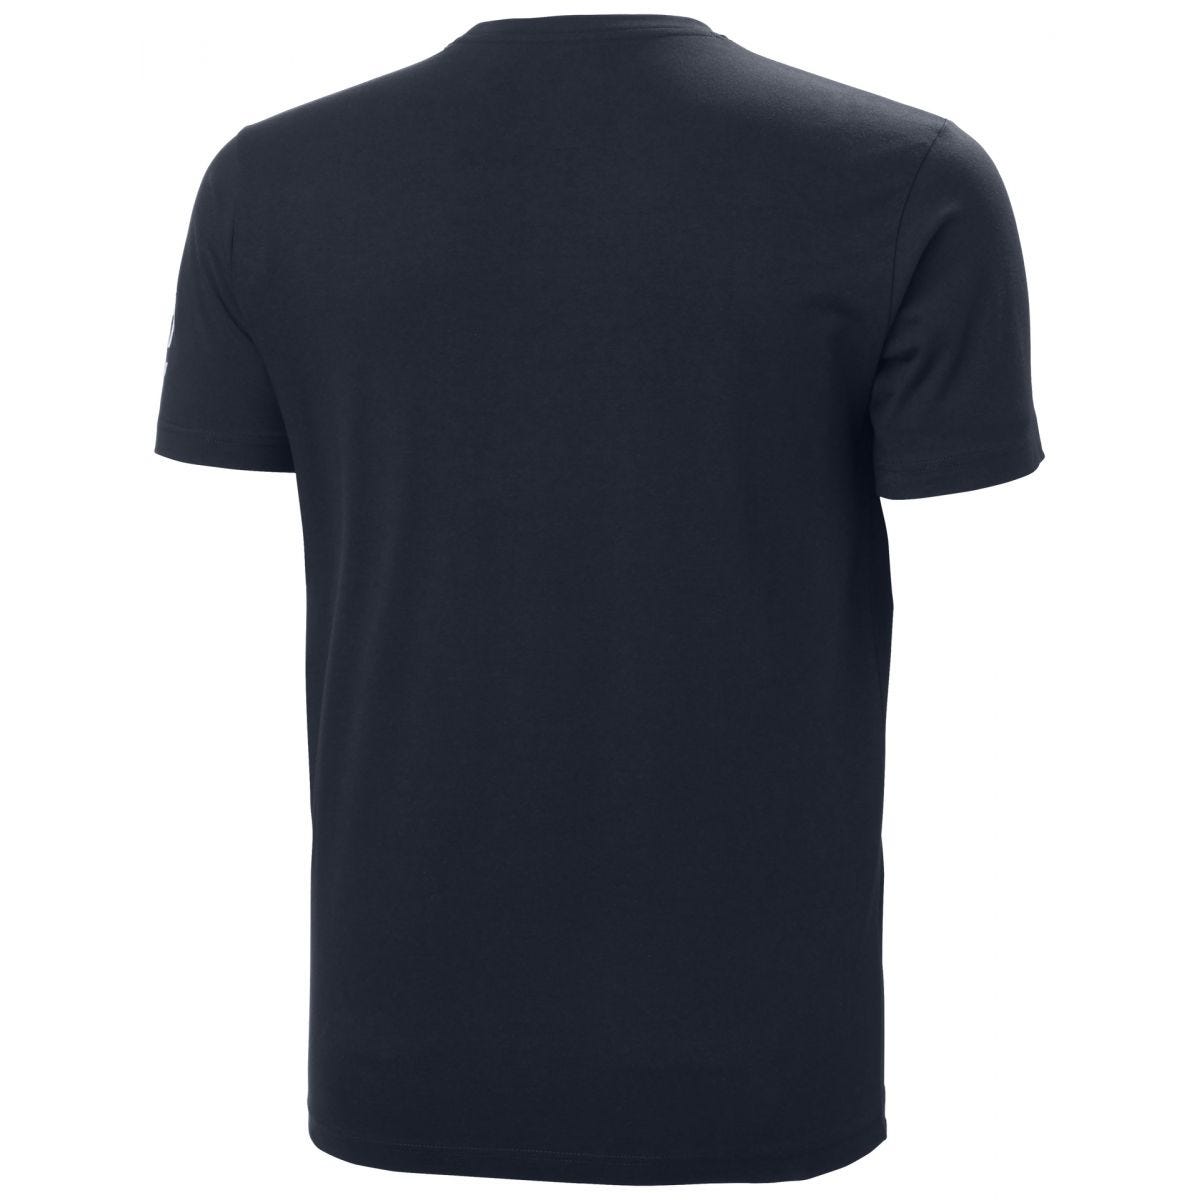 Tee-shirt Kensington Marine - Helly Hansen - Taille XL 1